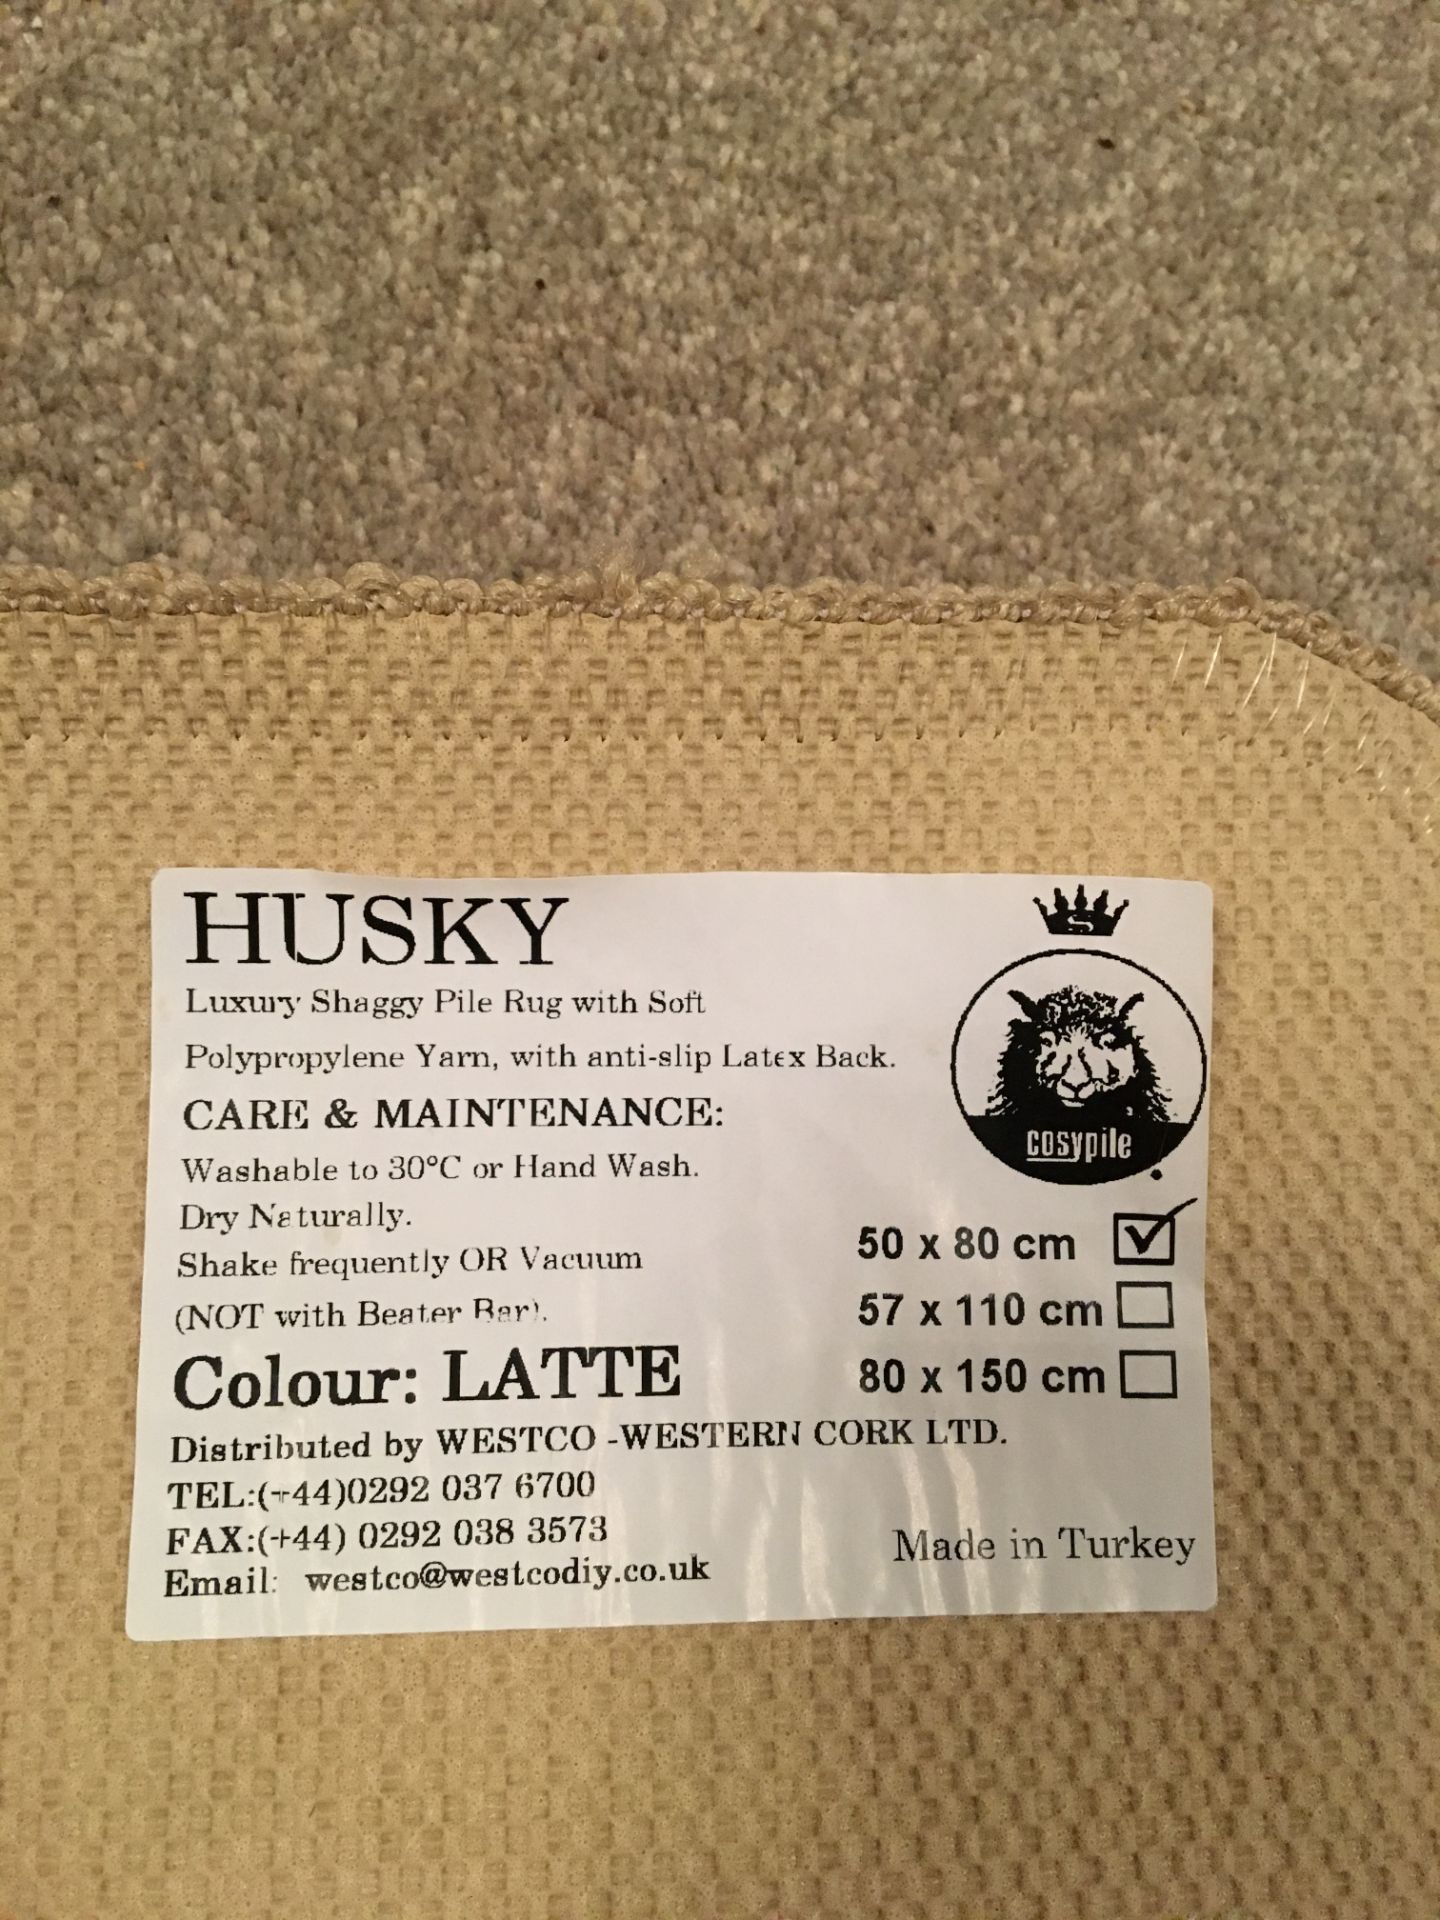 Husky Luxury Shaggy Pile Rugs - Qty 30 (1 box) - Image 3 of 3